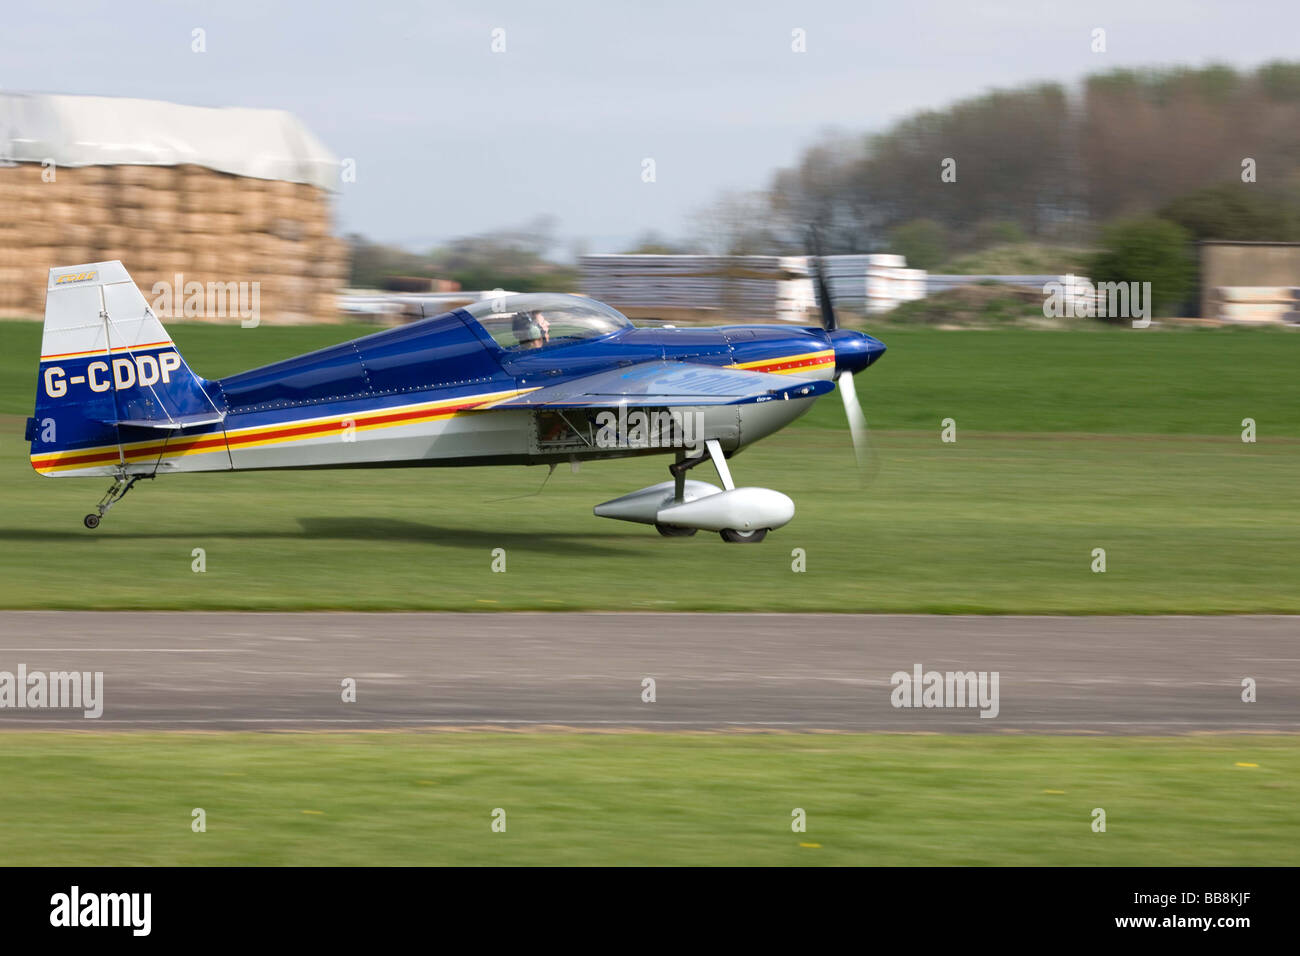 Edge Laser 230 G-CDDP landing at Breighton Airfield Stock Photo